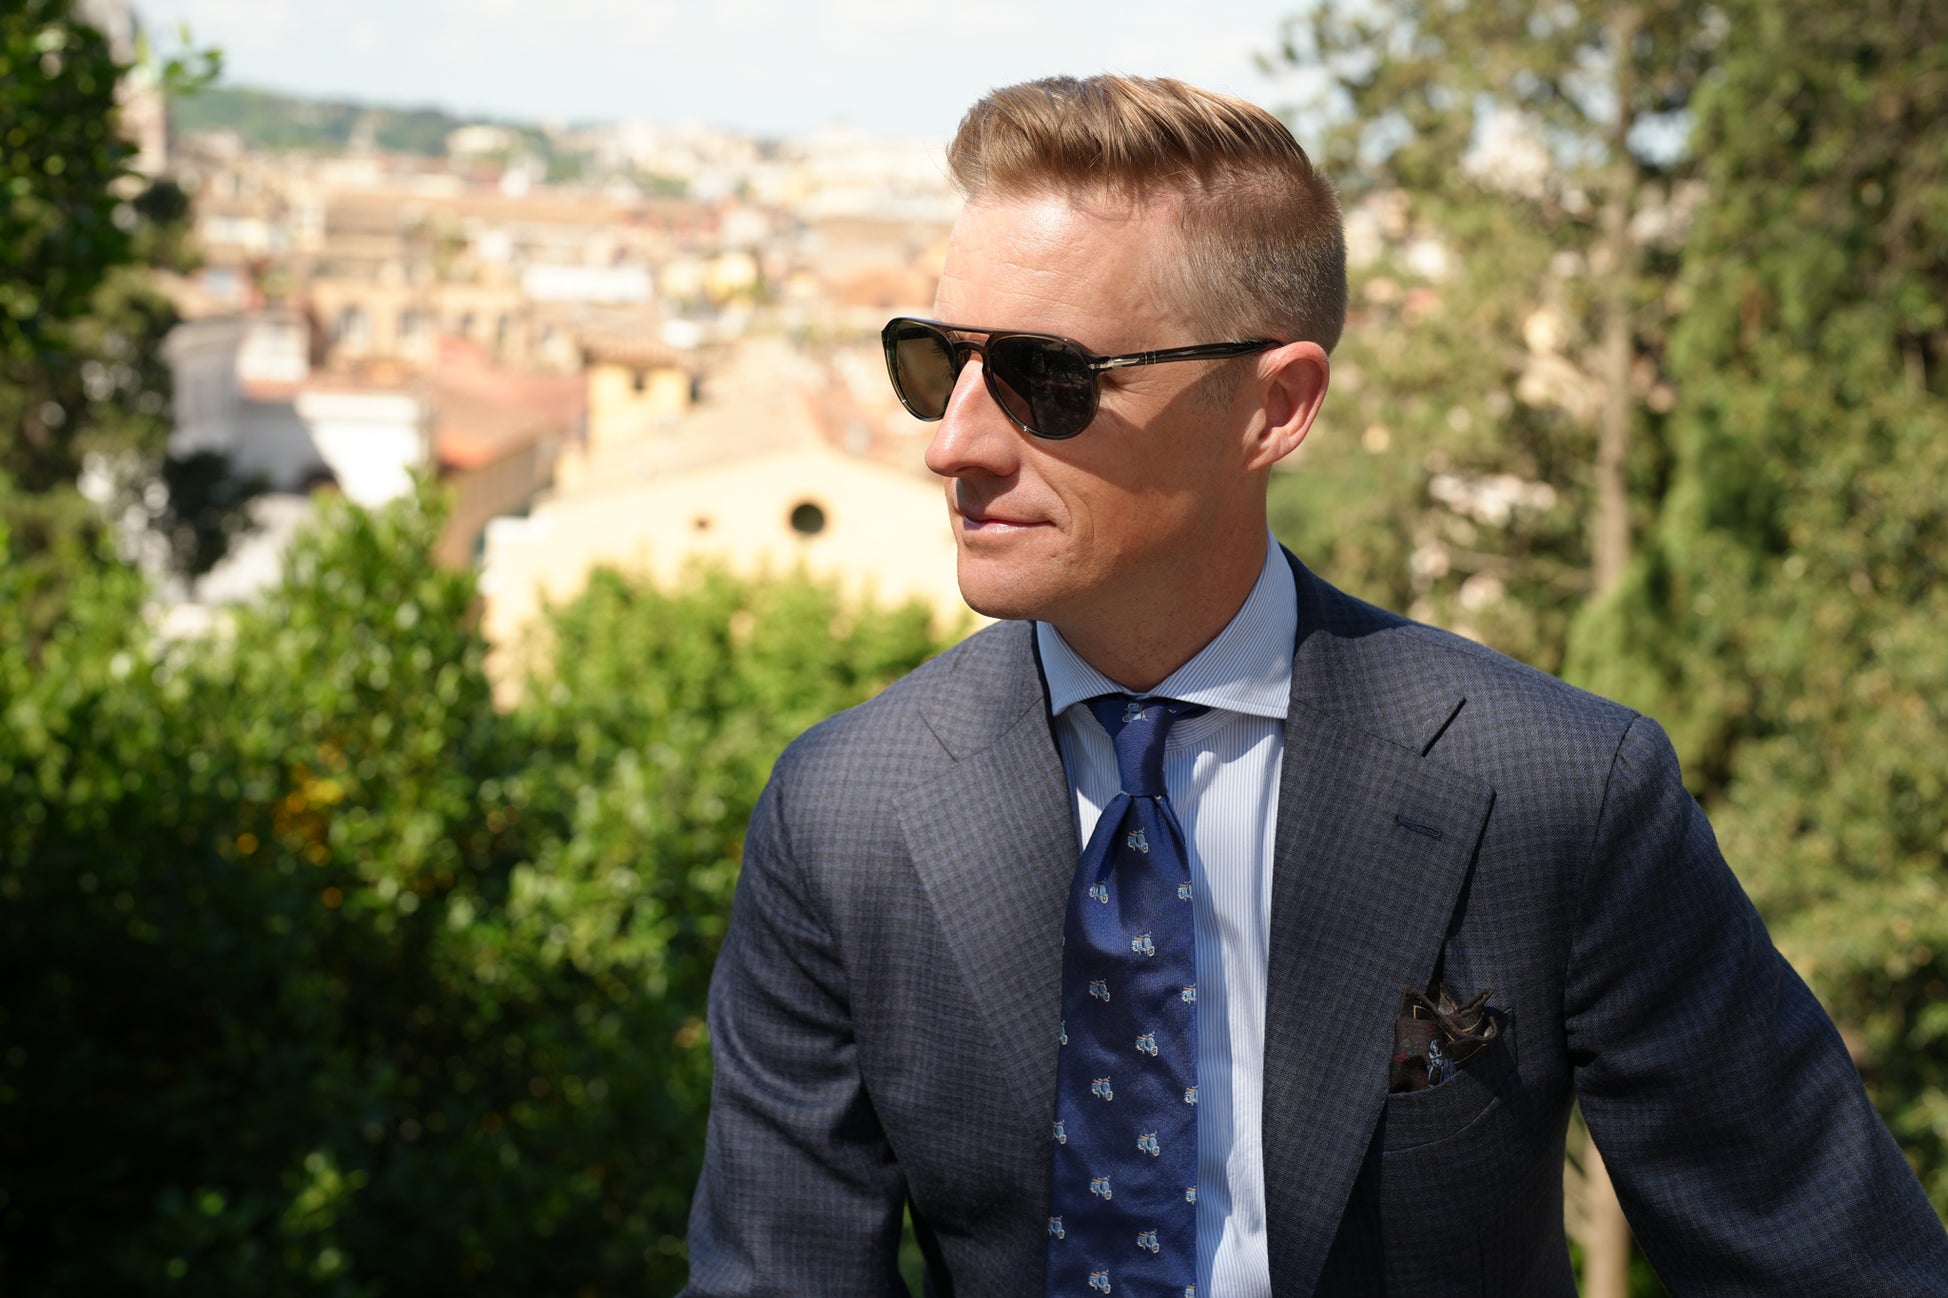 Derek in Rome in navy suit, striped blue shirt, jacquard tie